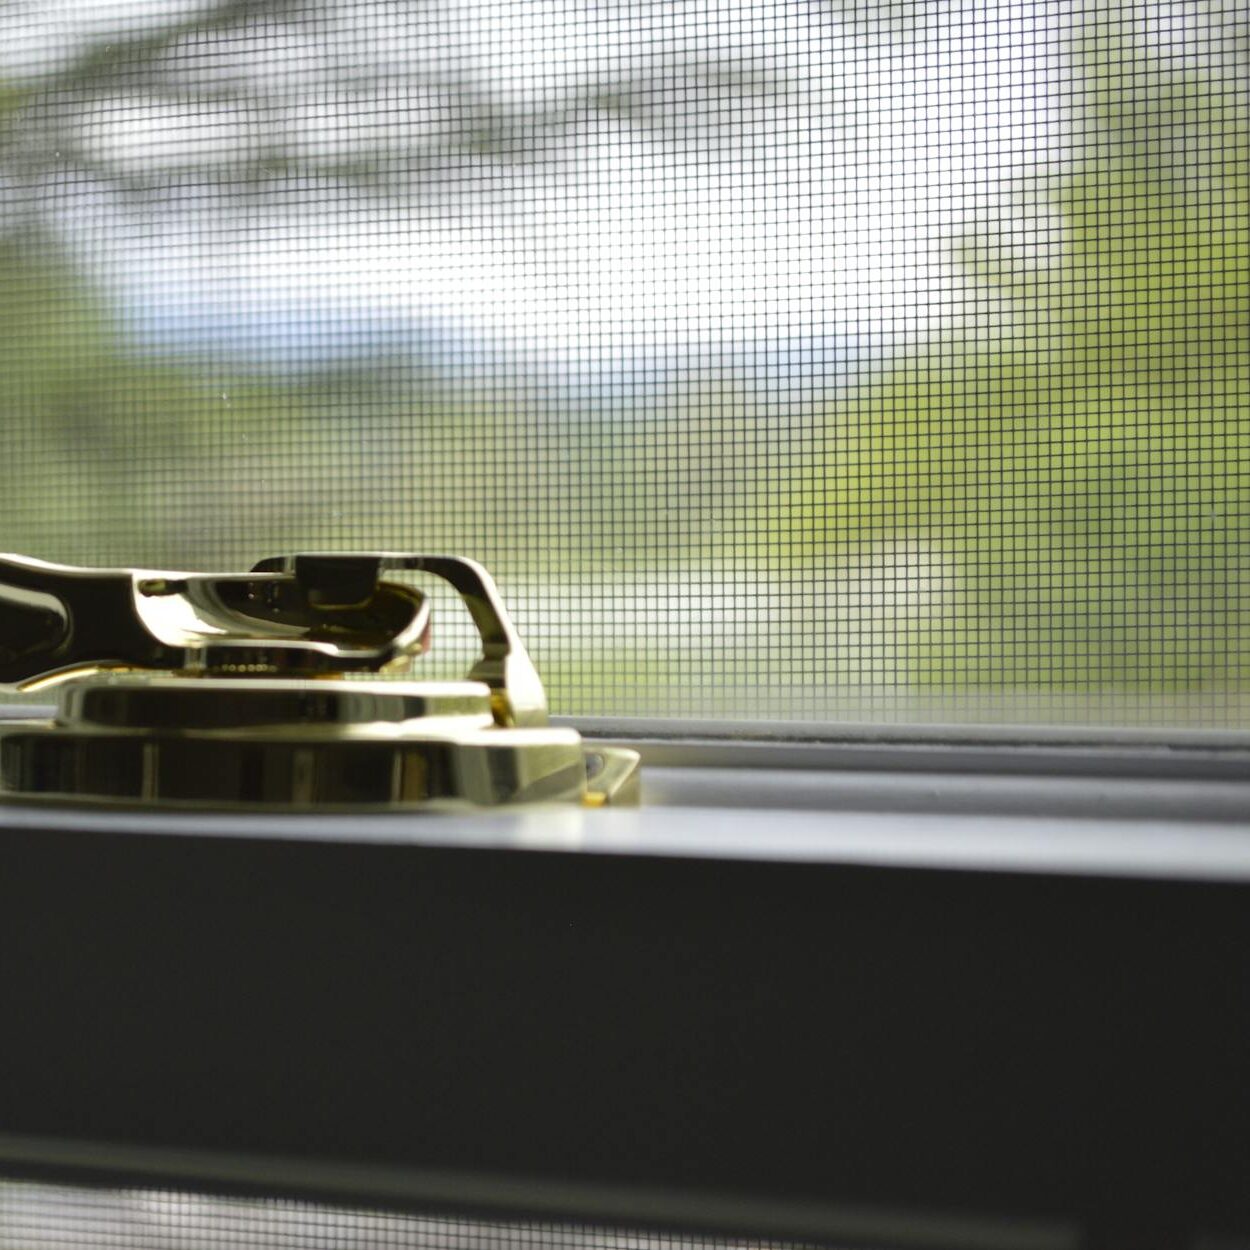 gold window lock